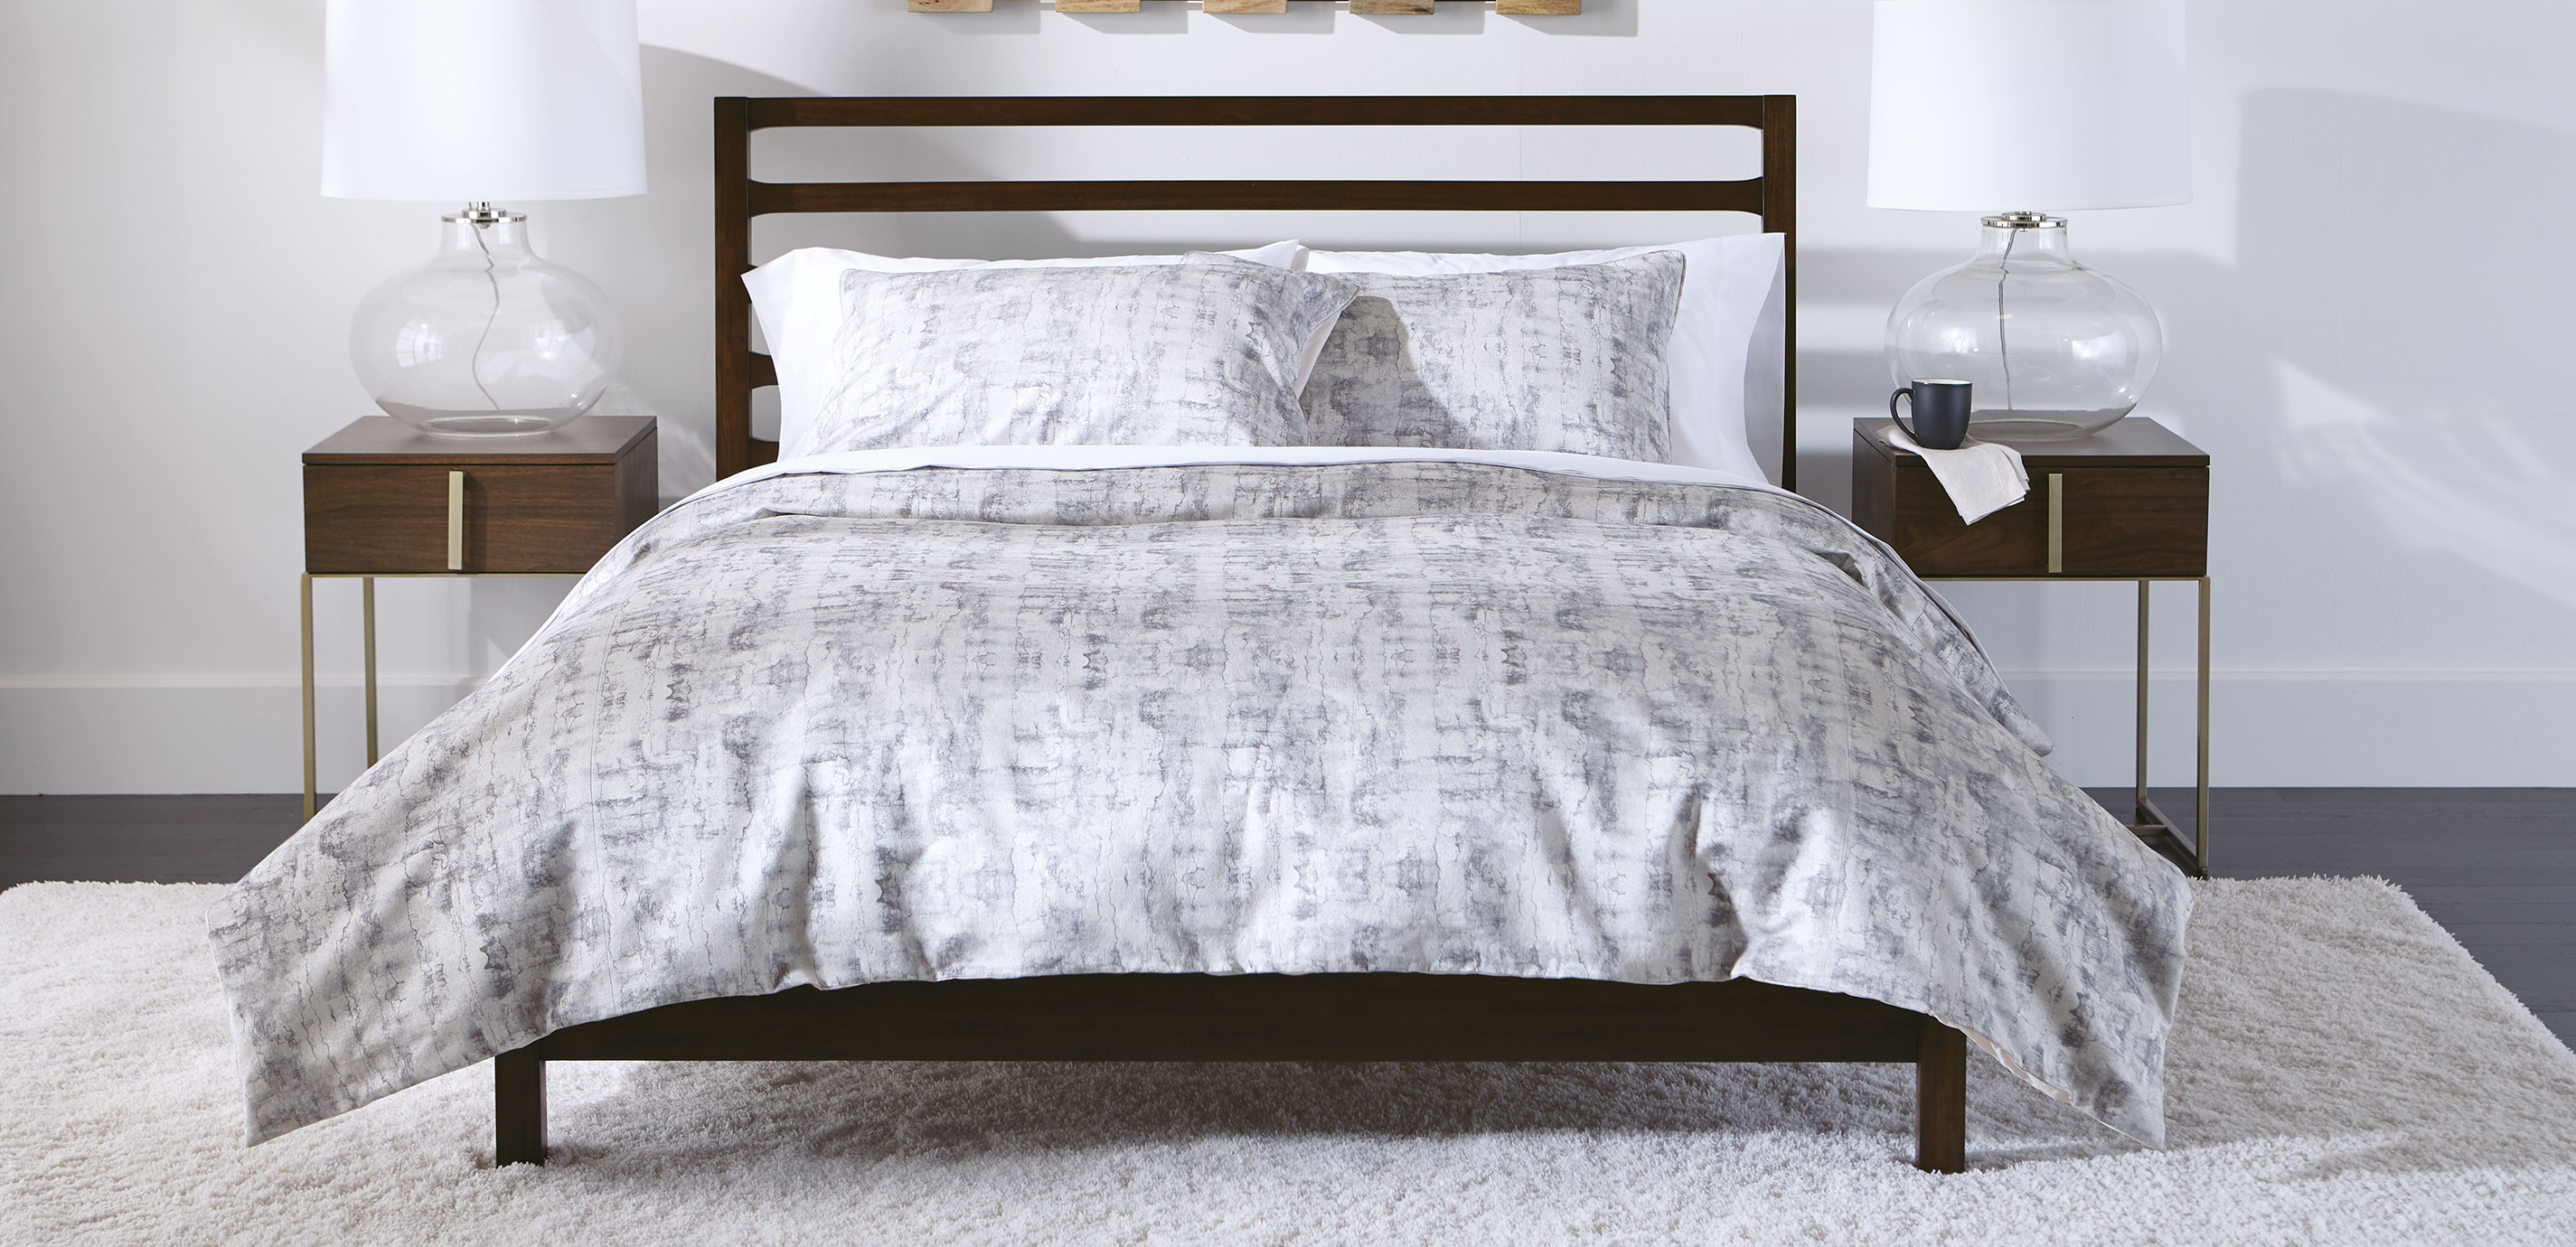 ClearloveWL Duvet Cover Set, Modern Marble Print Bed Reversable